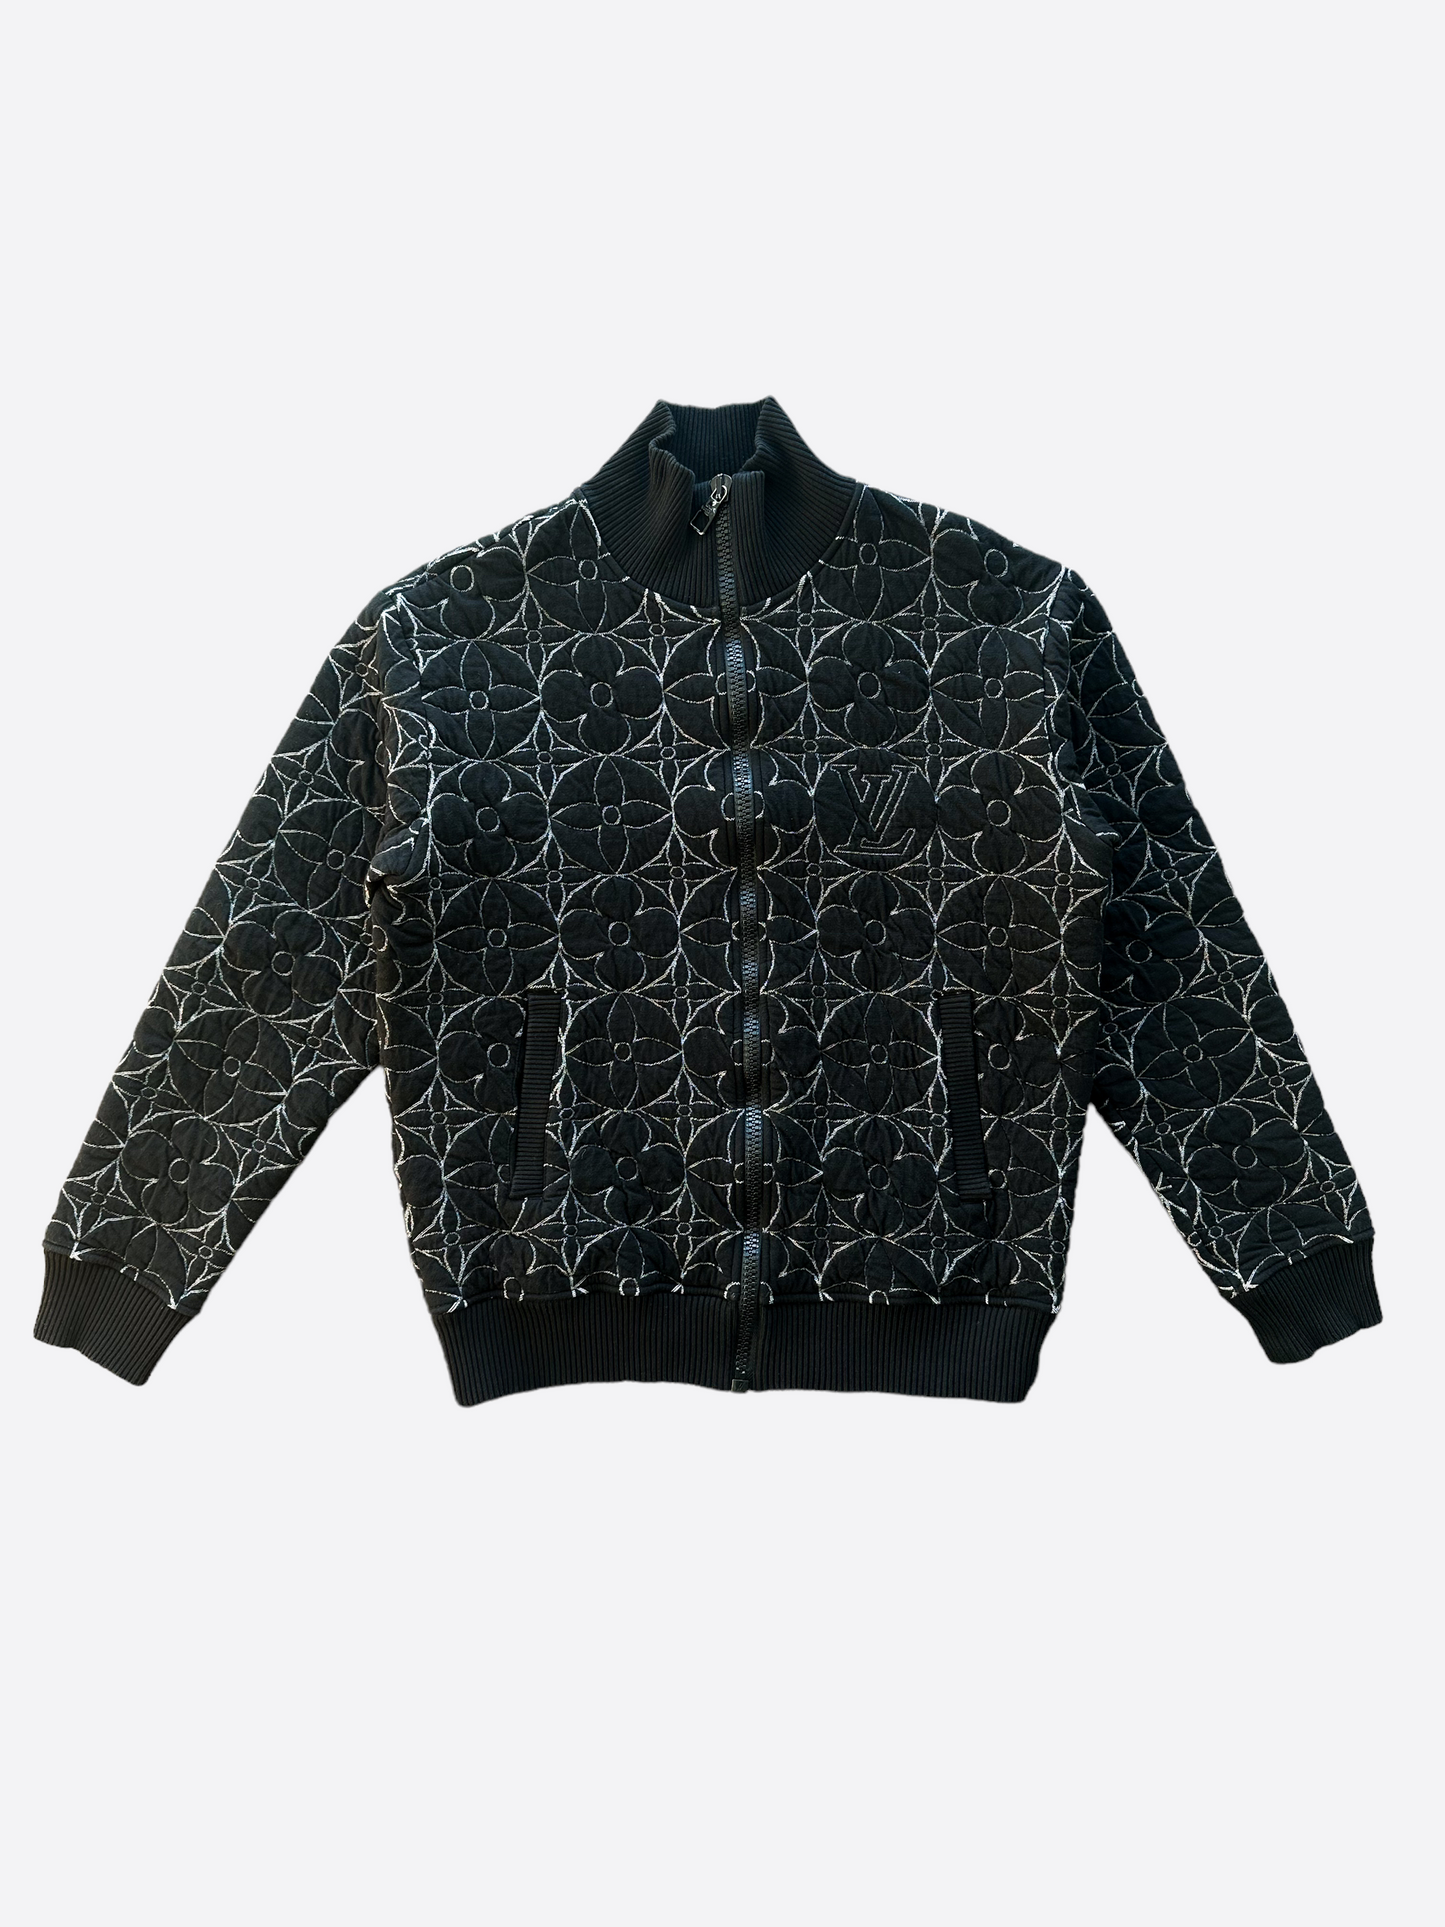 Sold out Louis Vuitton Black Flower Monogram Track Jacket X Large